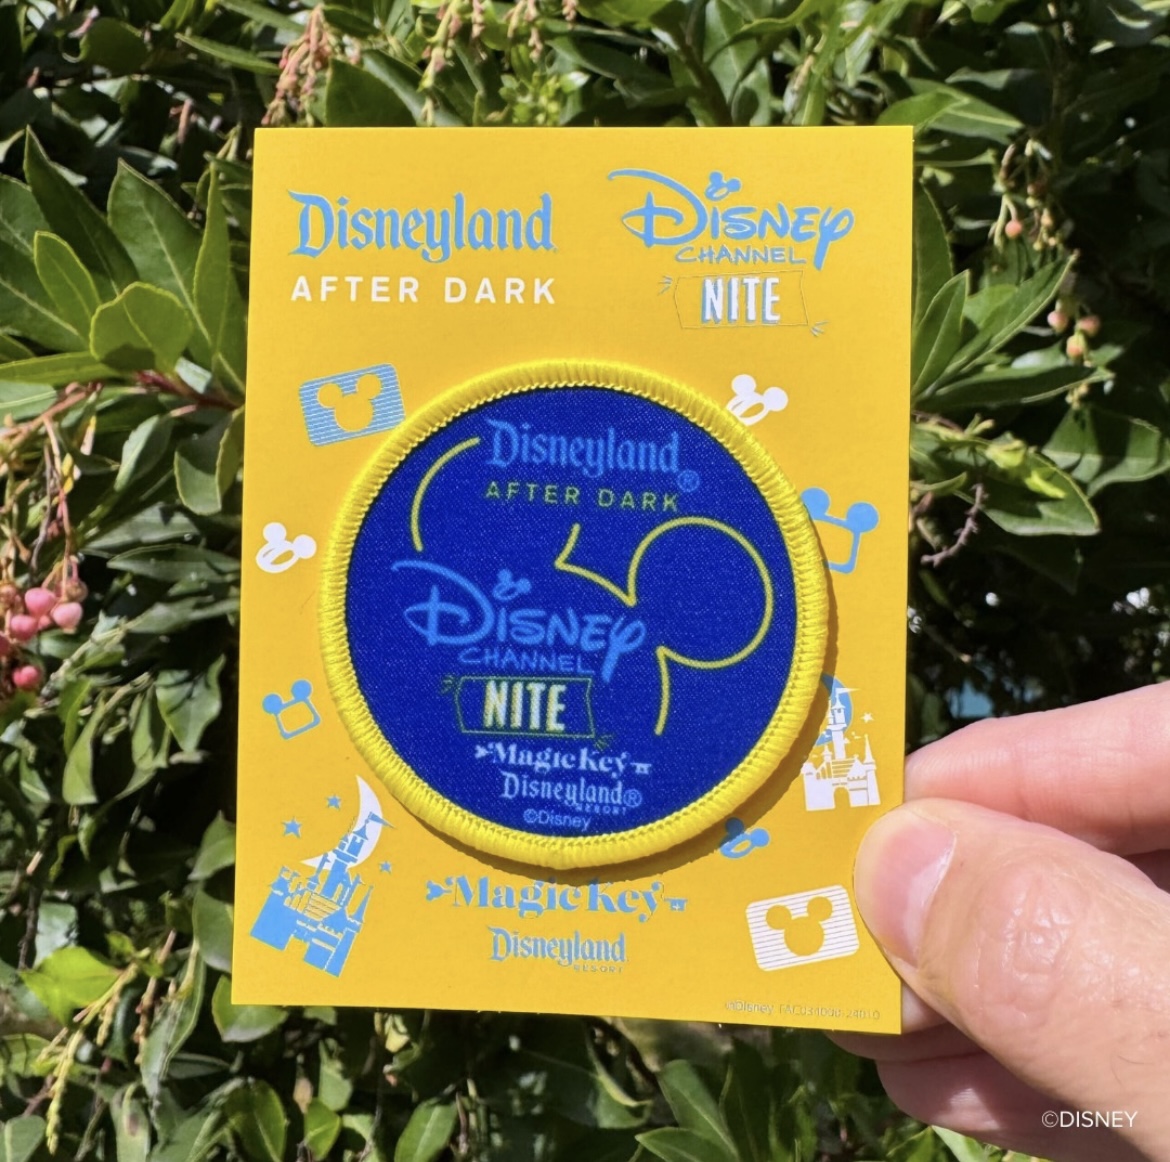 Disneyland After Dark Disney Channel Nite Magic Key Exclusive Patch